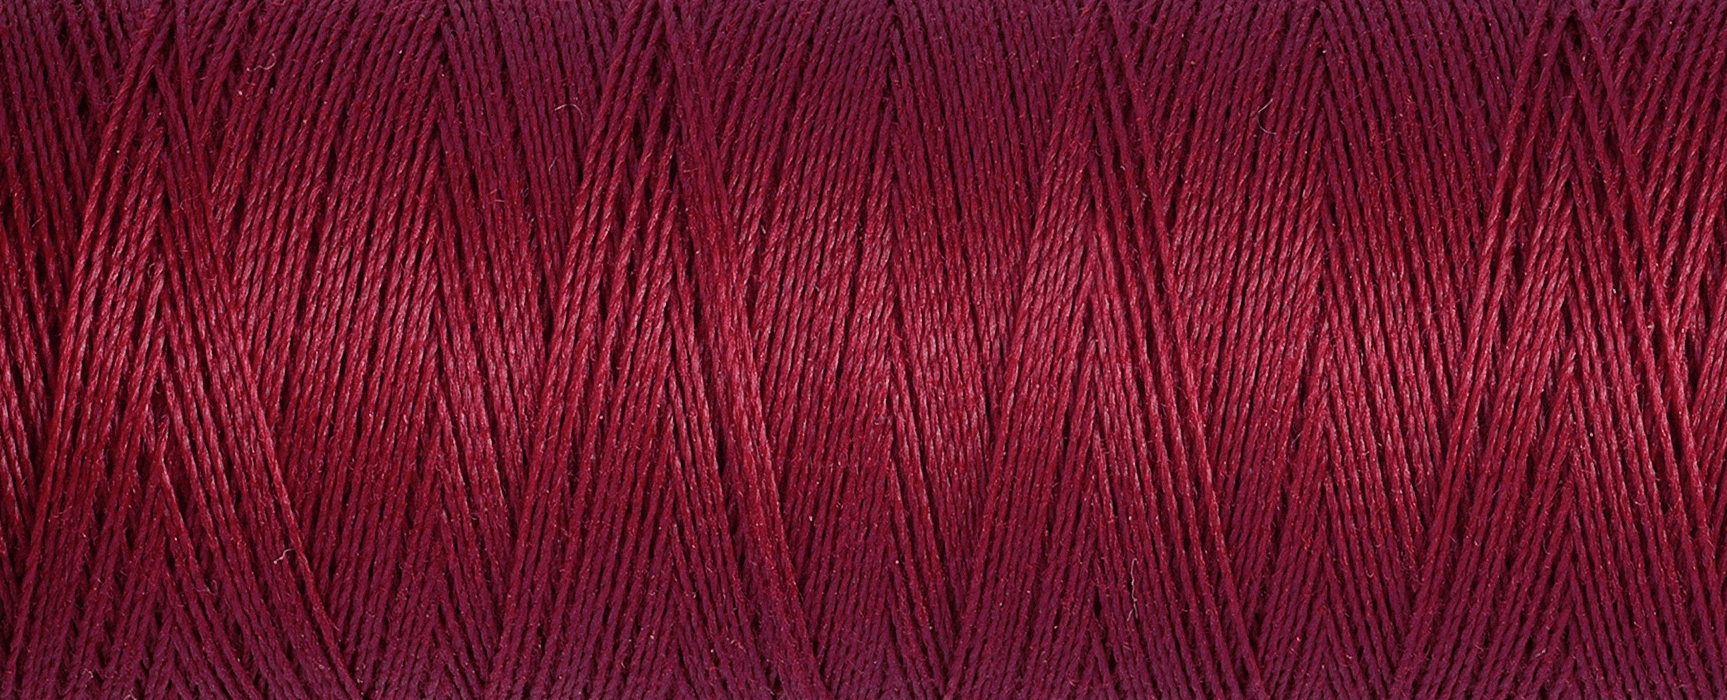 Gutermann Sew-All Thread - 100M (226)-Thread-Jelly Fabrics